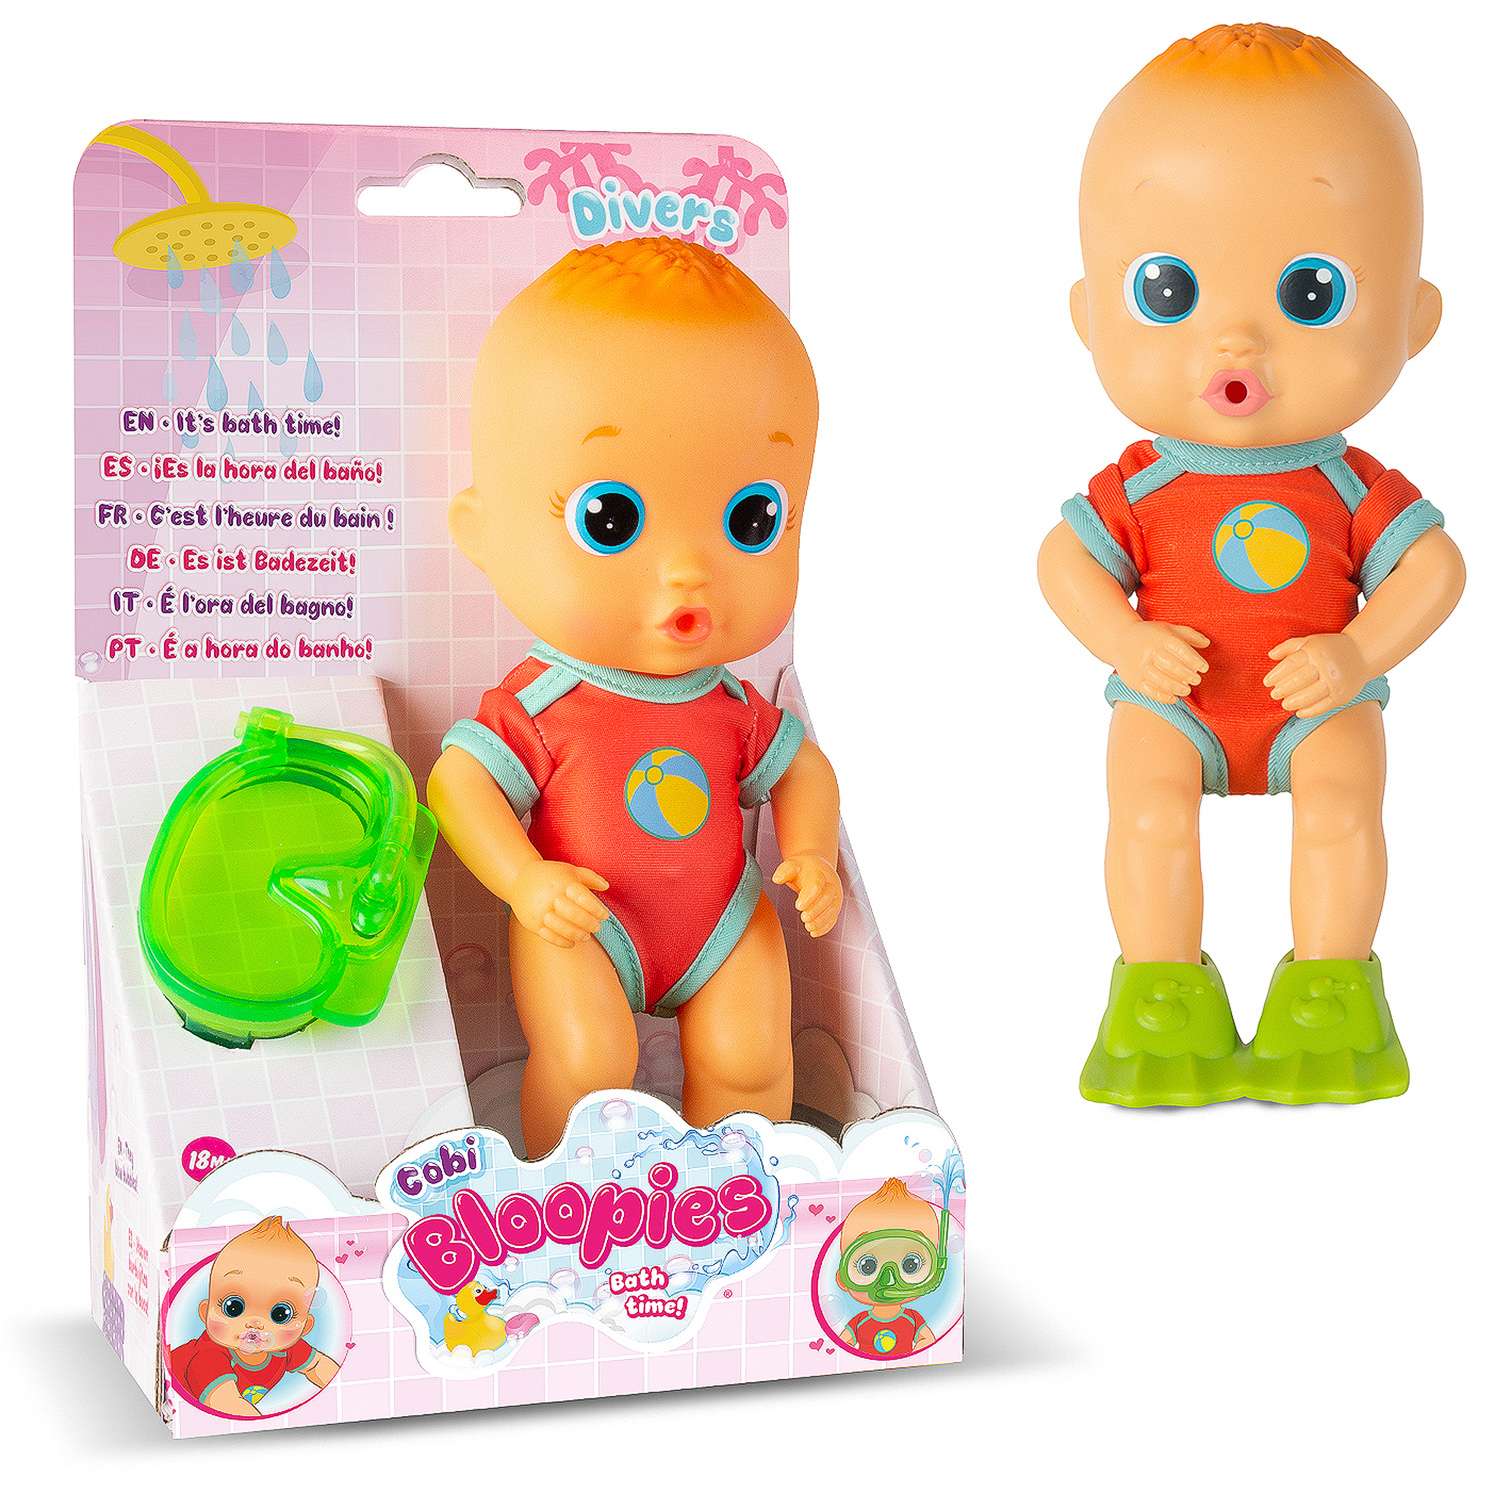 Кукла IMC Toys Bloopies для купания Cobi 24 см 90750 - фото 2